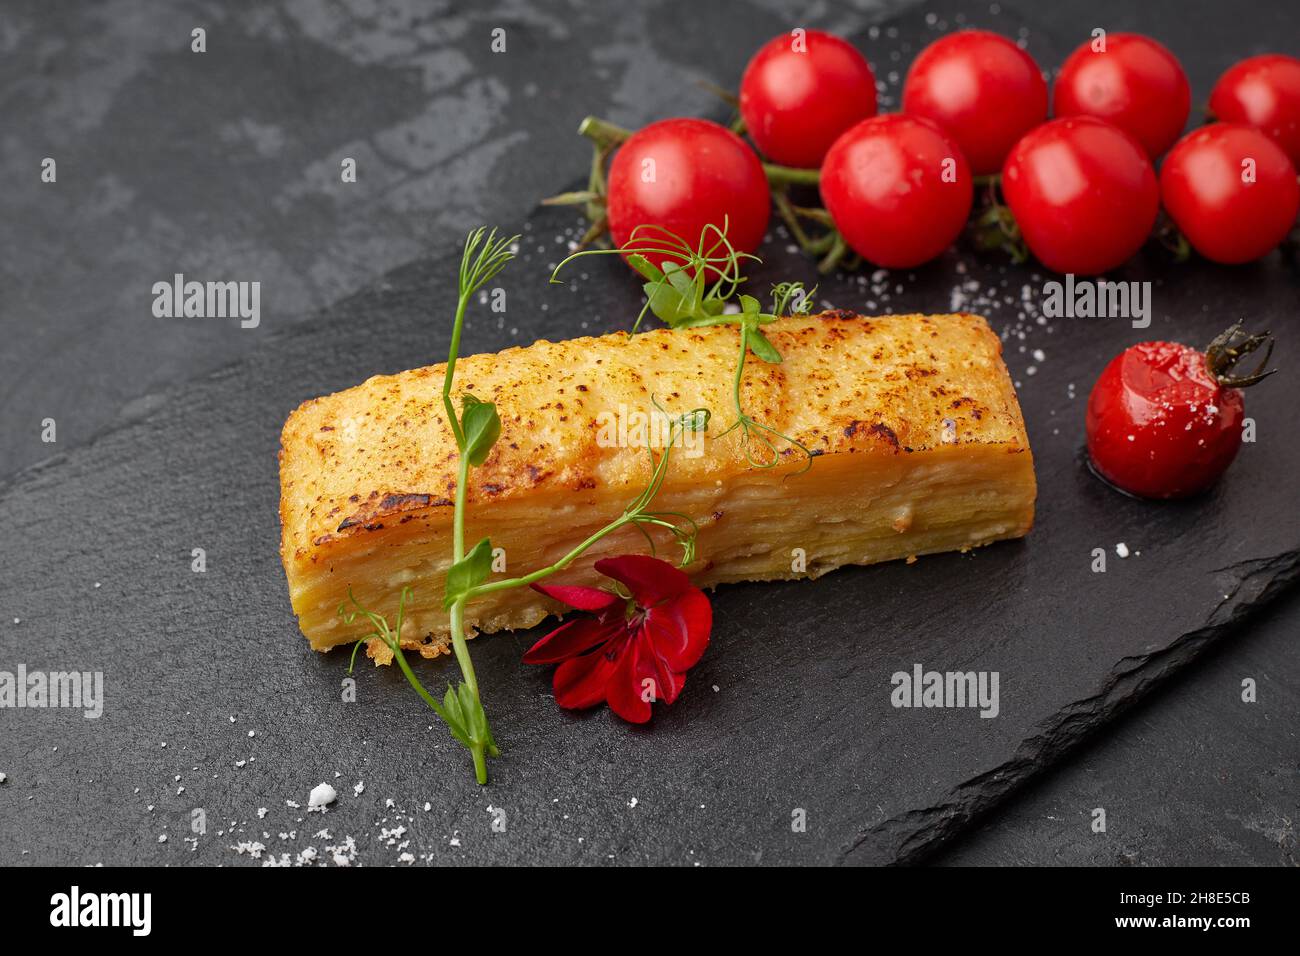 Dauphinua potato gratin with cherry tomatoes on a black stone Stock Photo